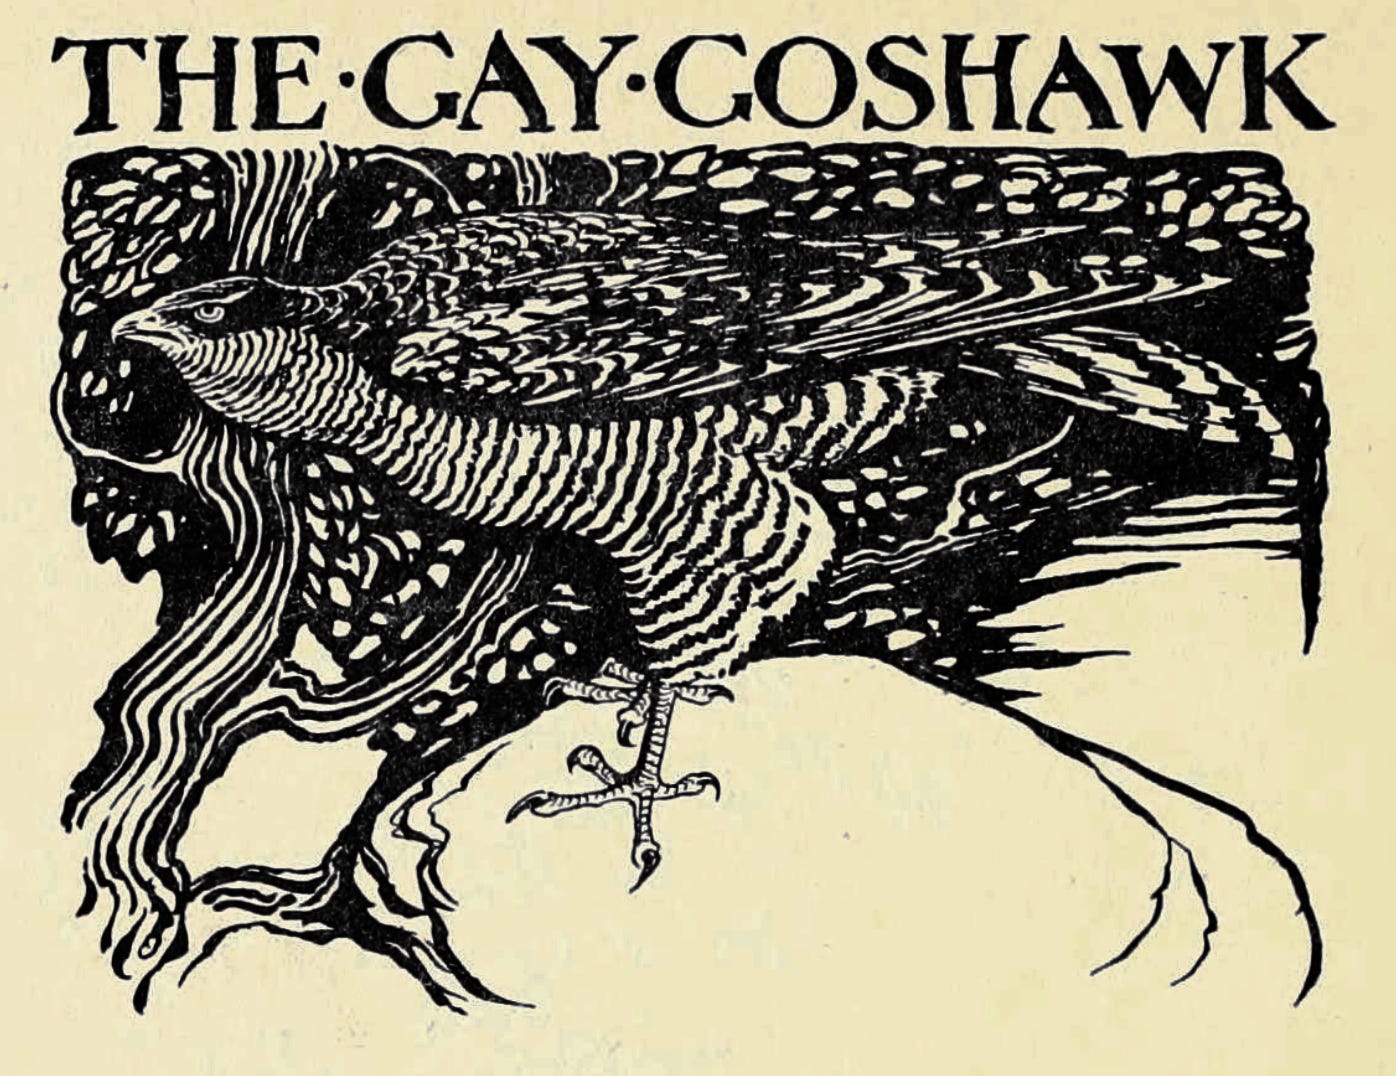 ROUD 61: The Gay Goshawk - by Karl Sinfield